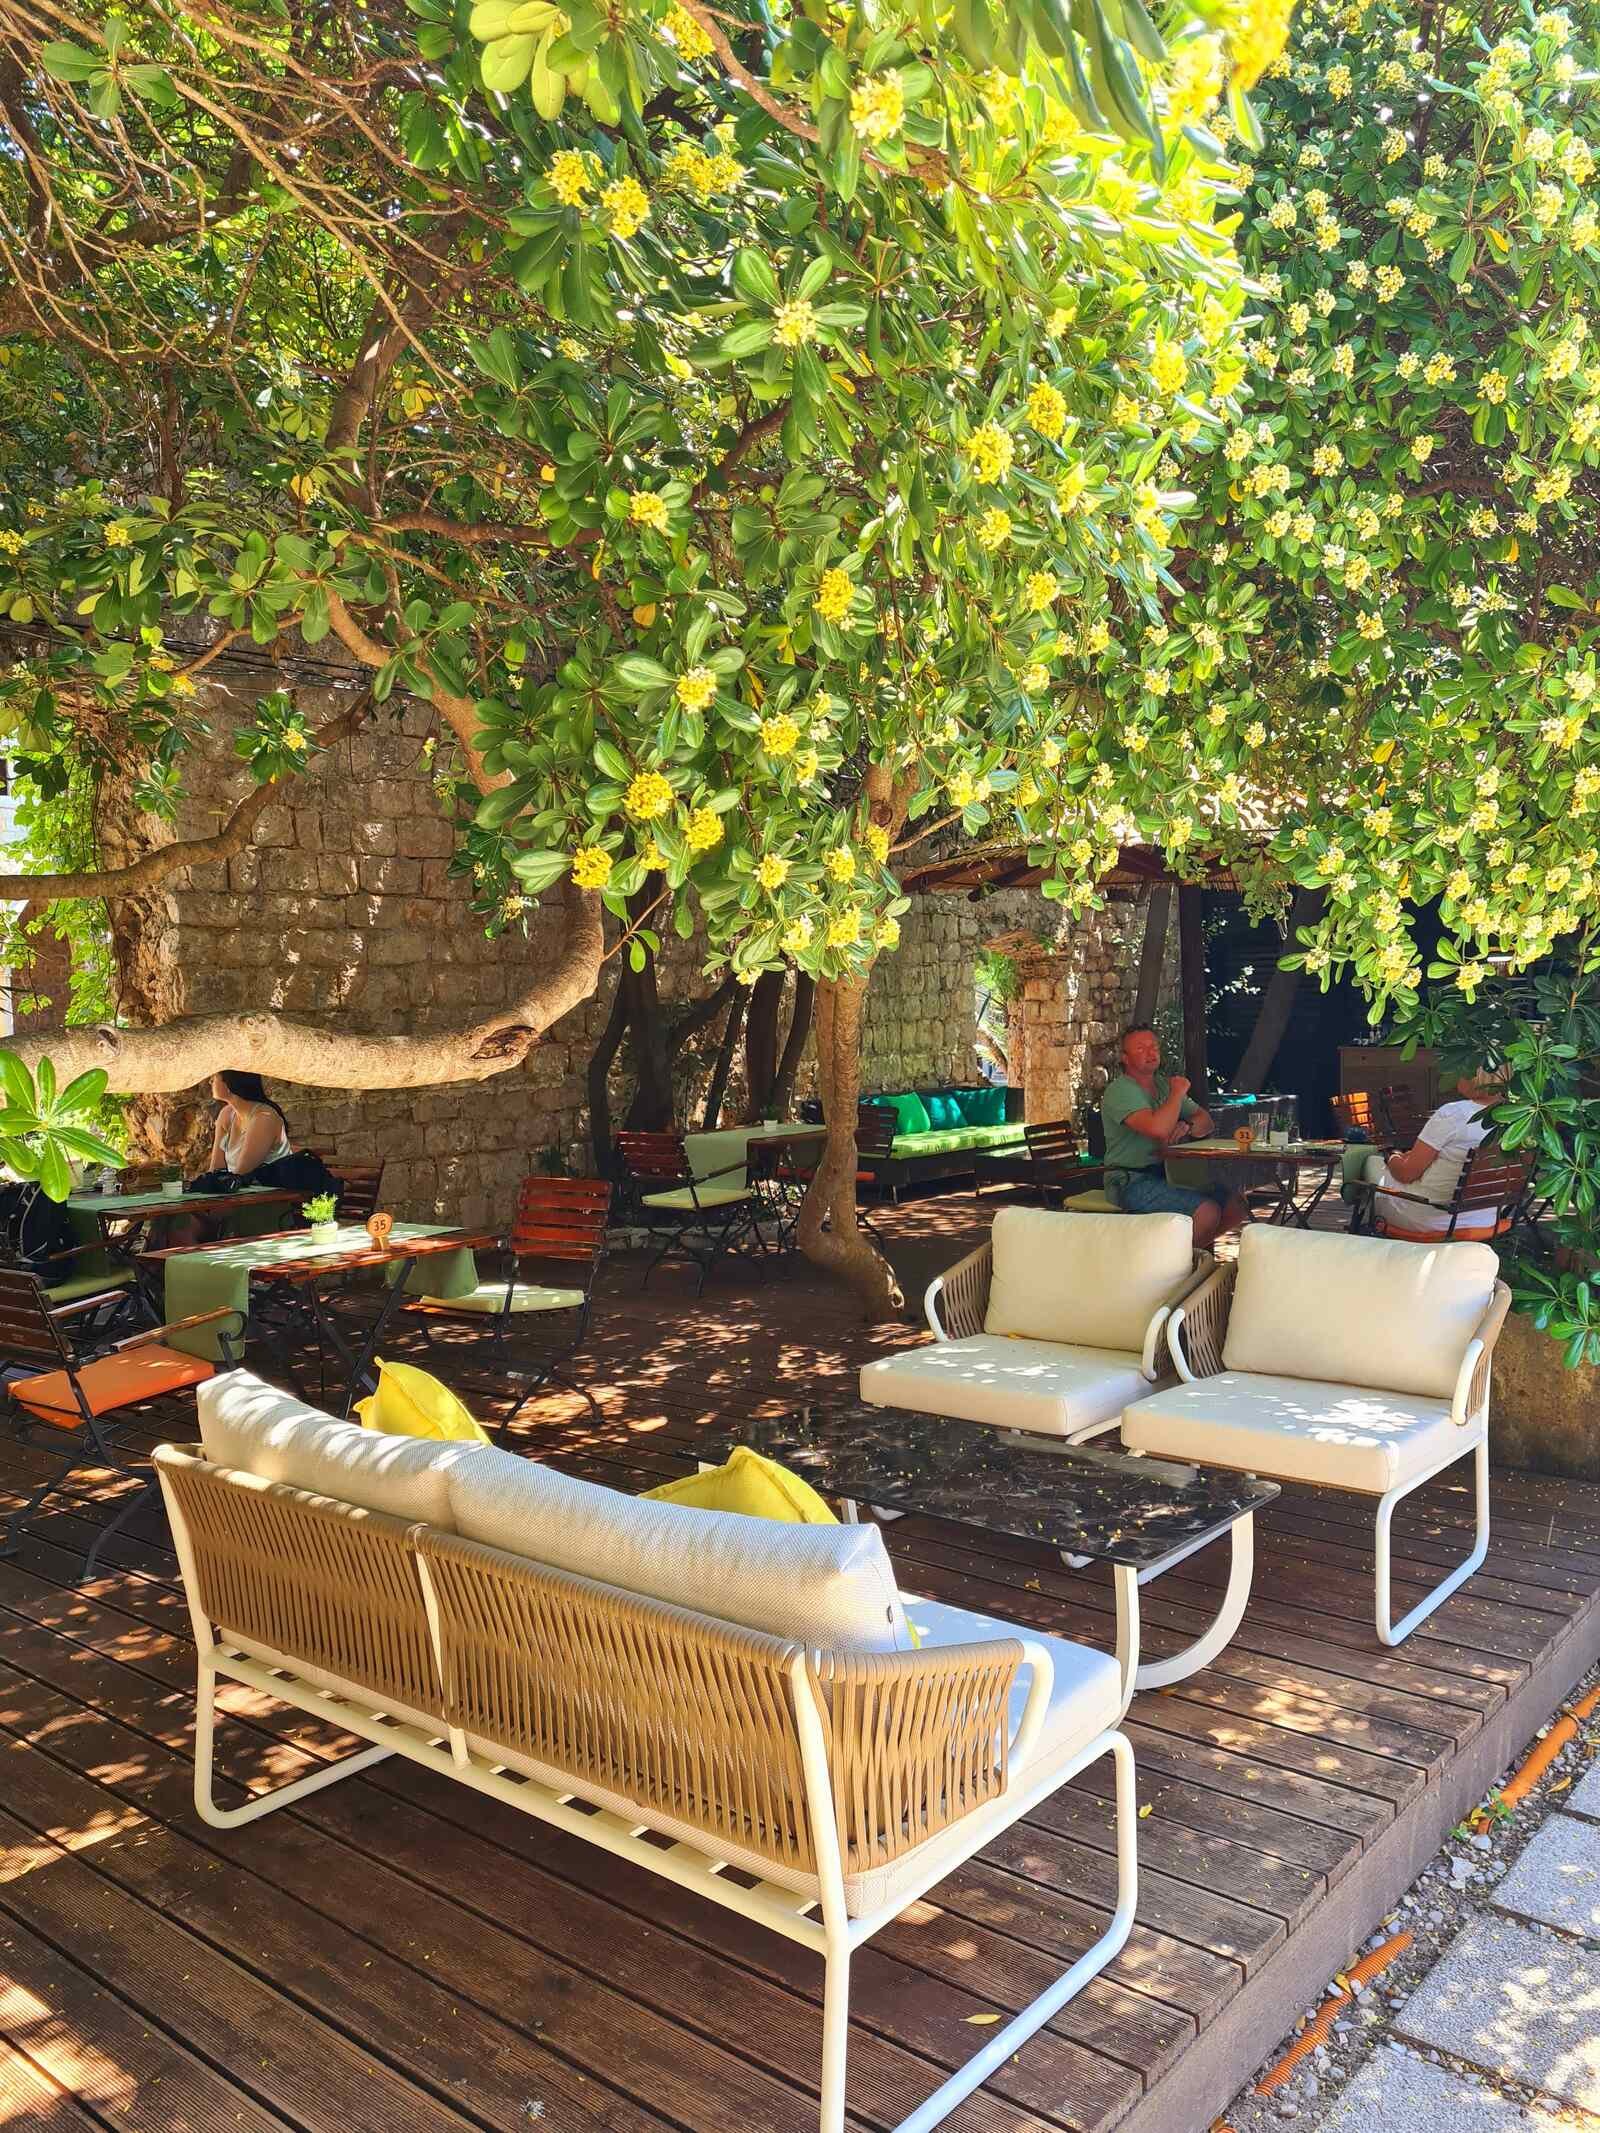 outdoor furniture on a deck underneath shady trees  at a Lokrum Island restaurant